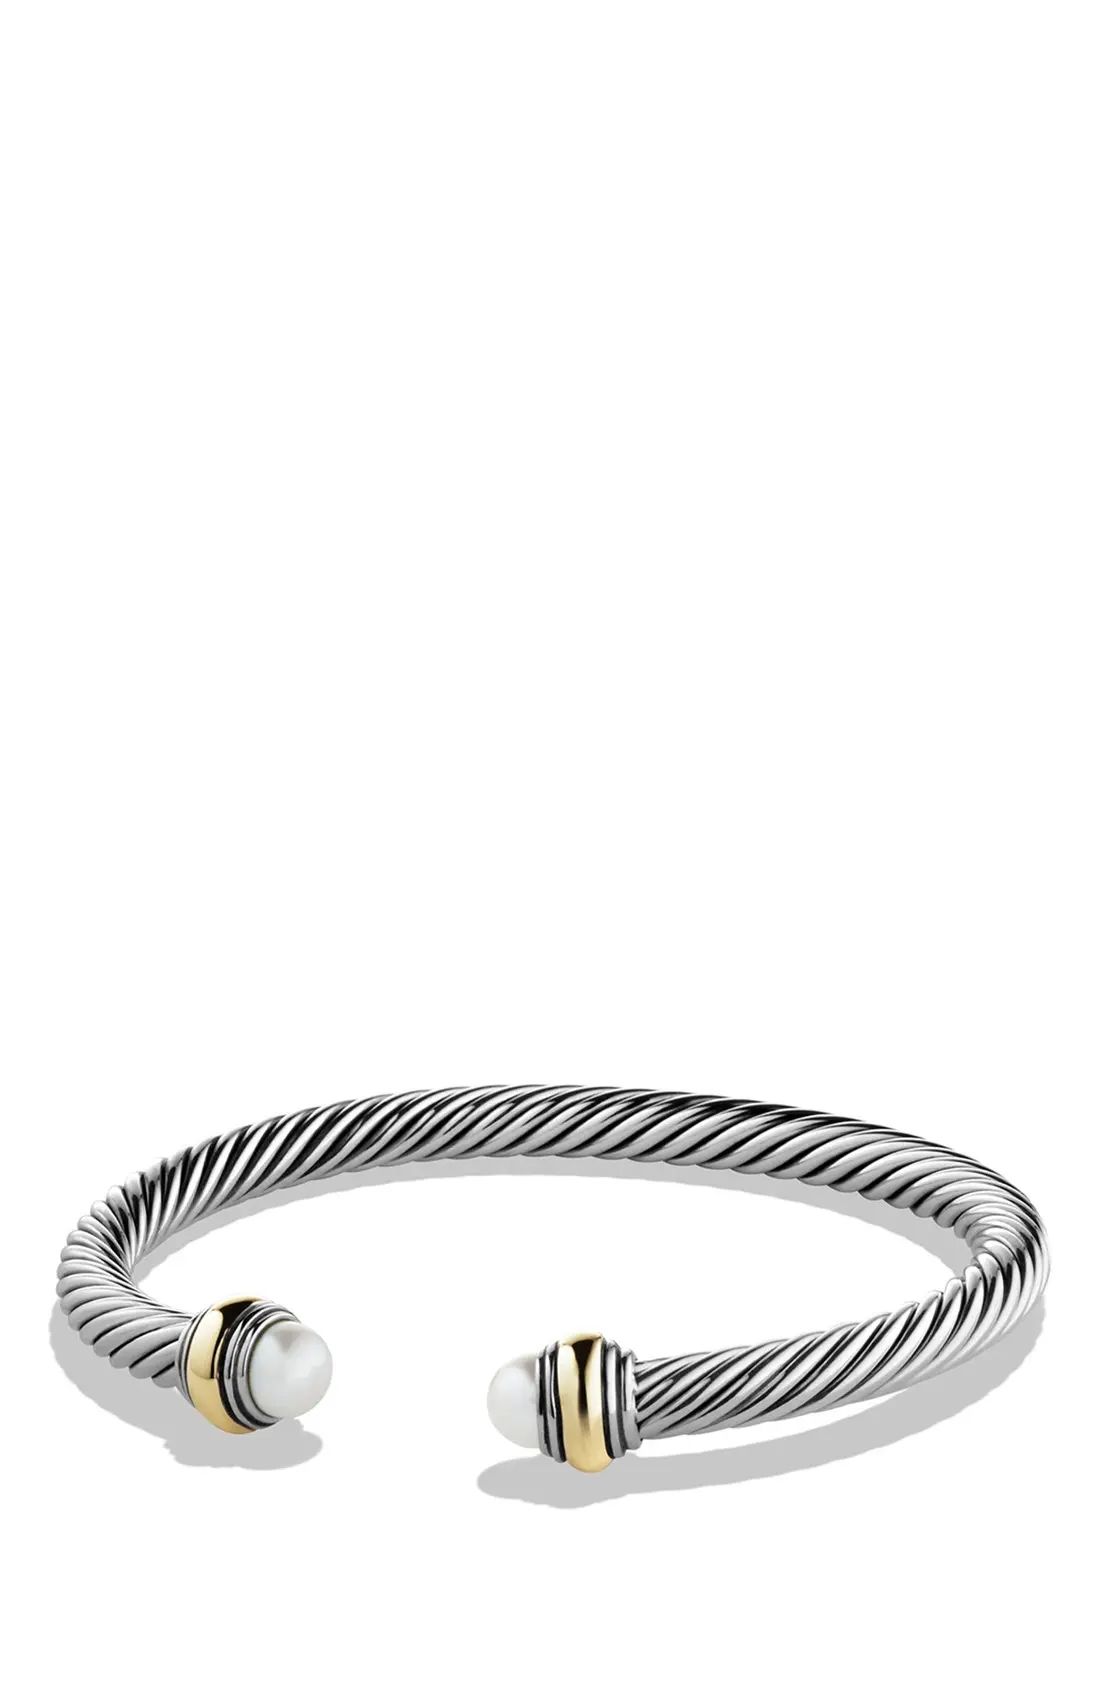 Women's David Yurman Cable Classics Bracelet With Semiprecious Stones & 14K Gold Accent, 5mm | Nordstrom